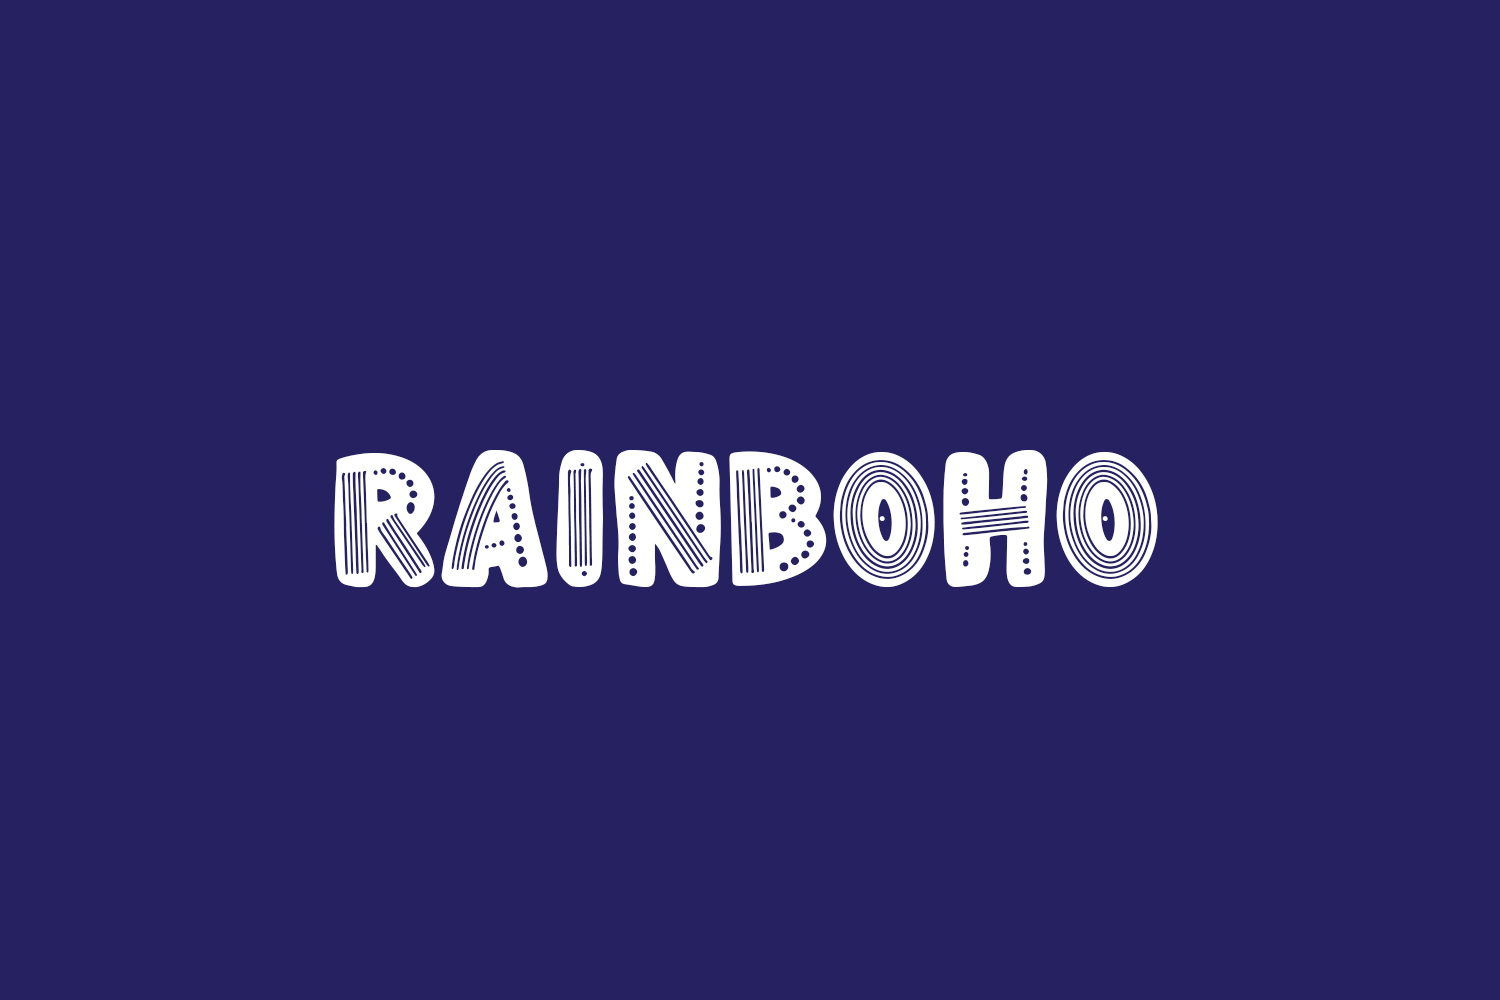 Rainboho